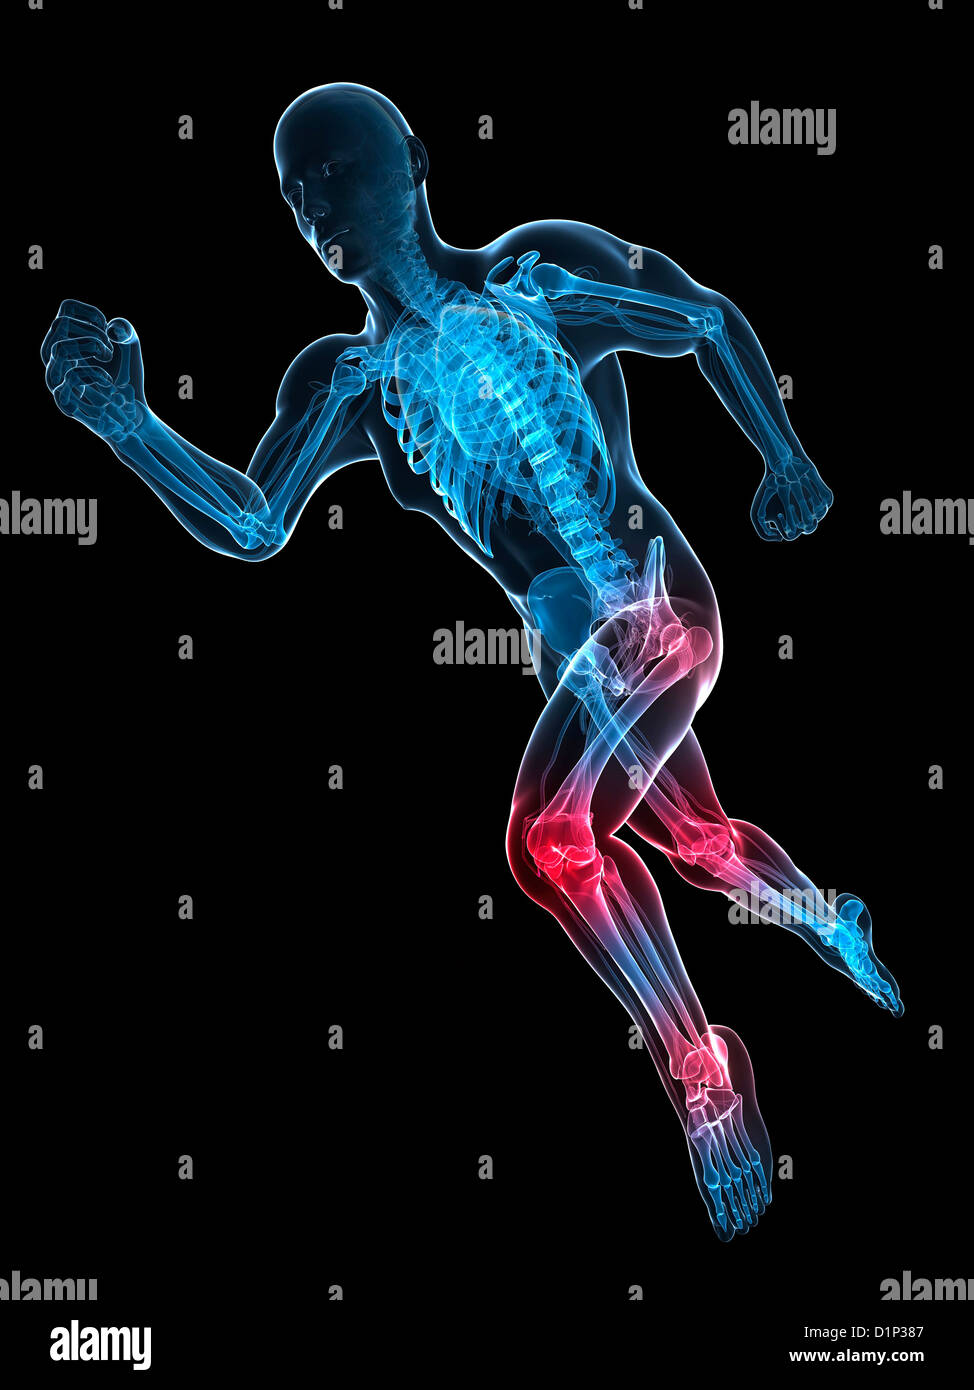 Running injuries, conceptual artwork Stock Photo